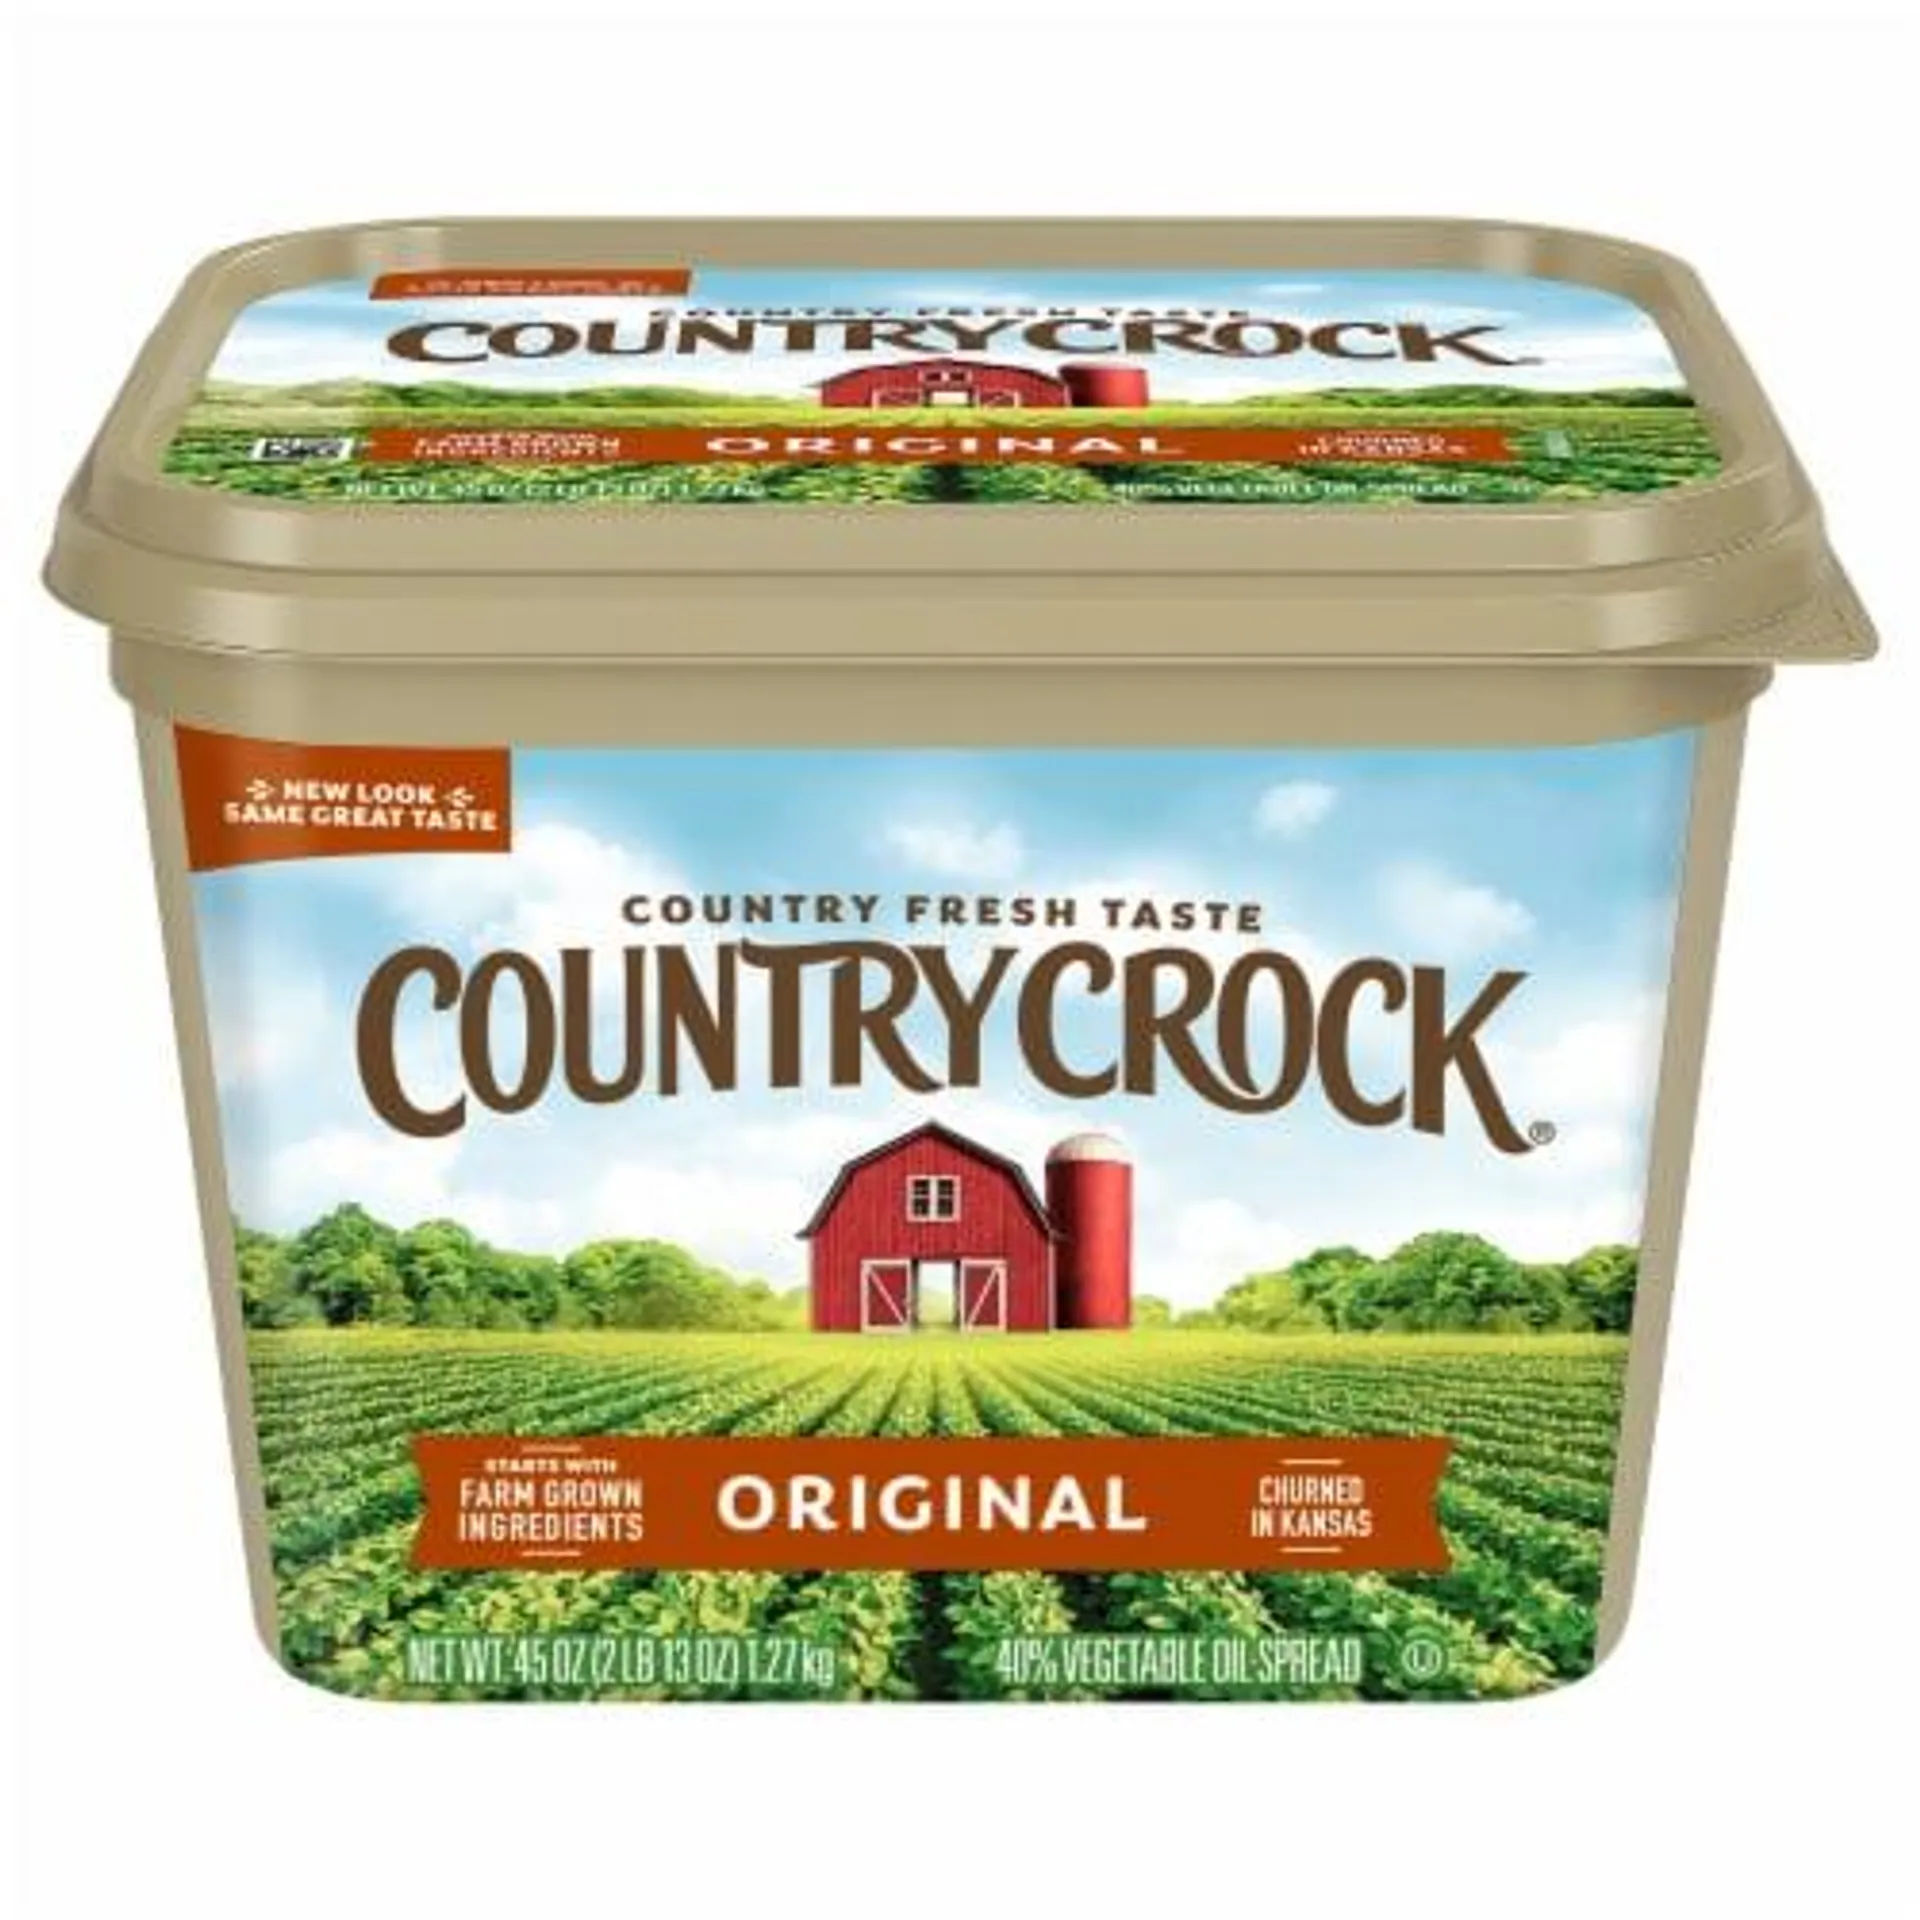 Country Crock® Original Vegetable Oil Spread Tub